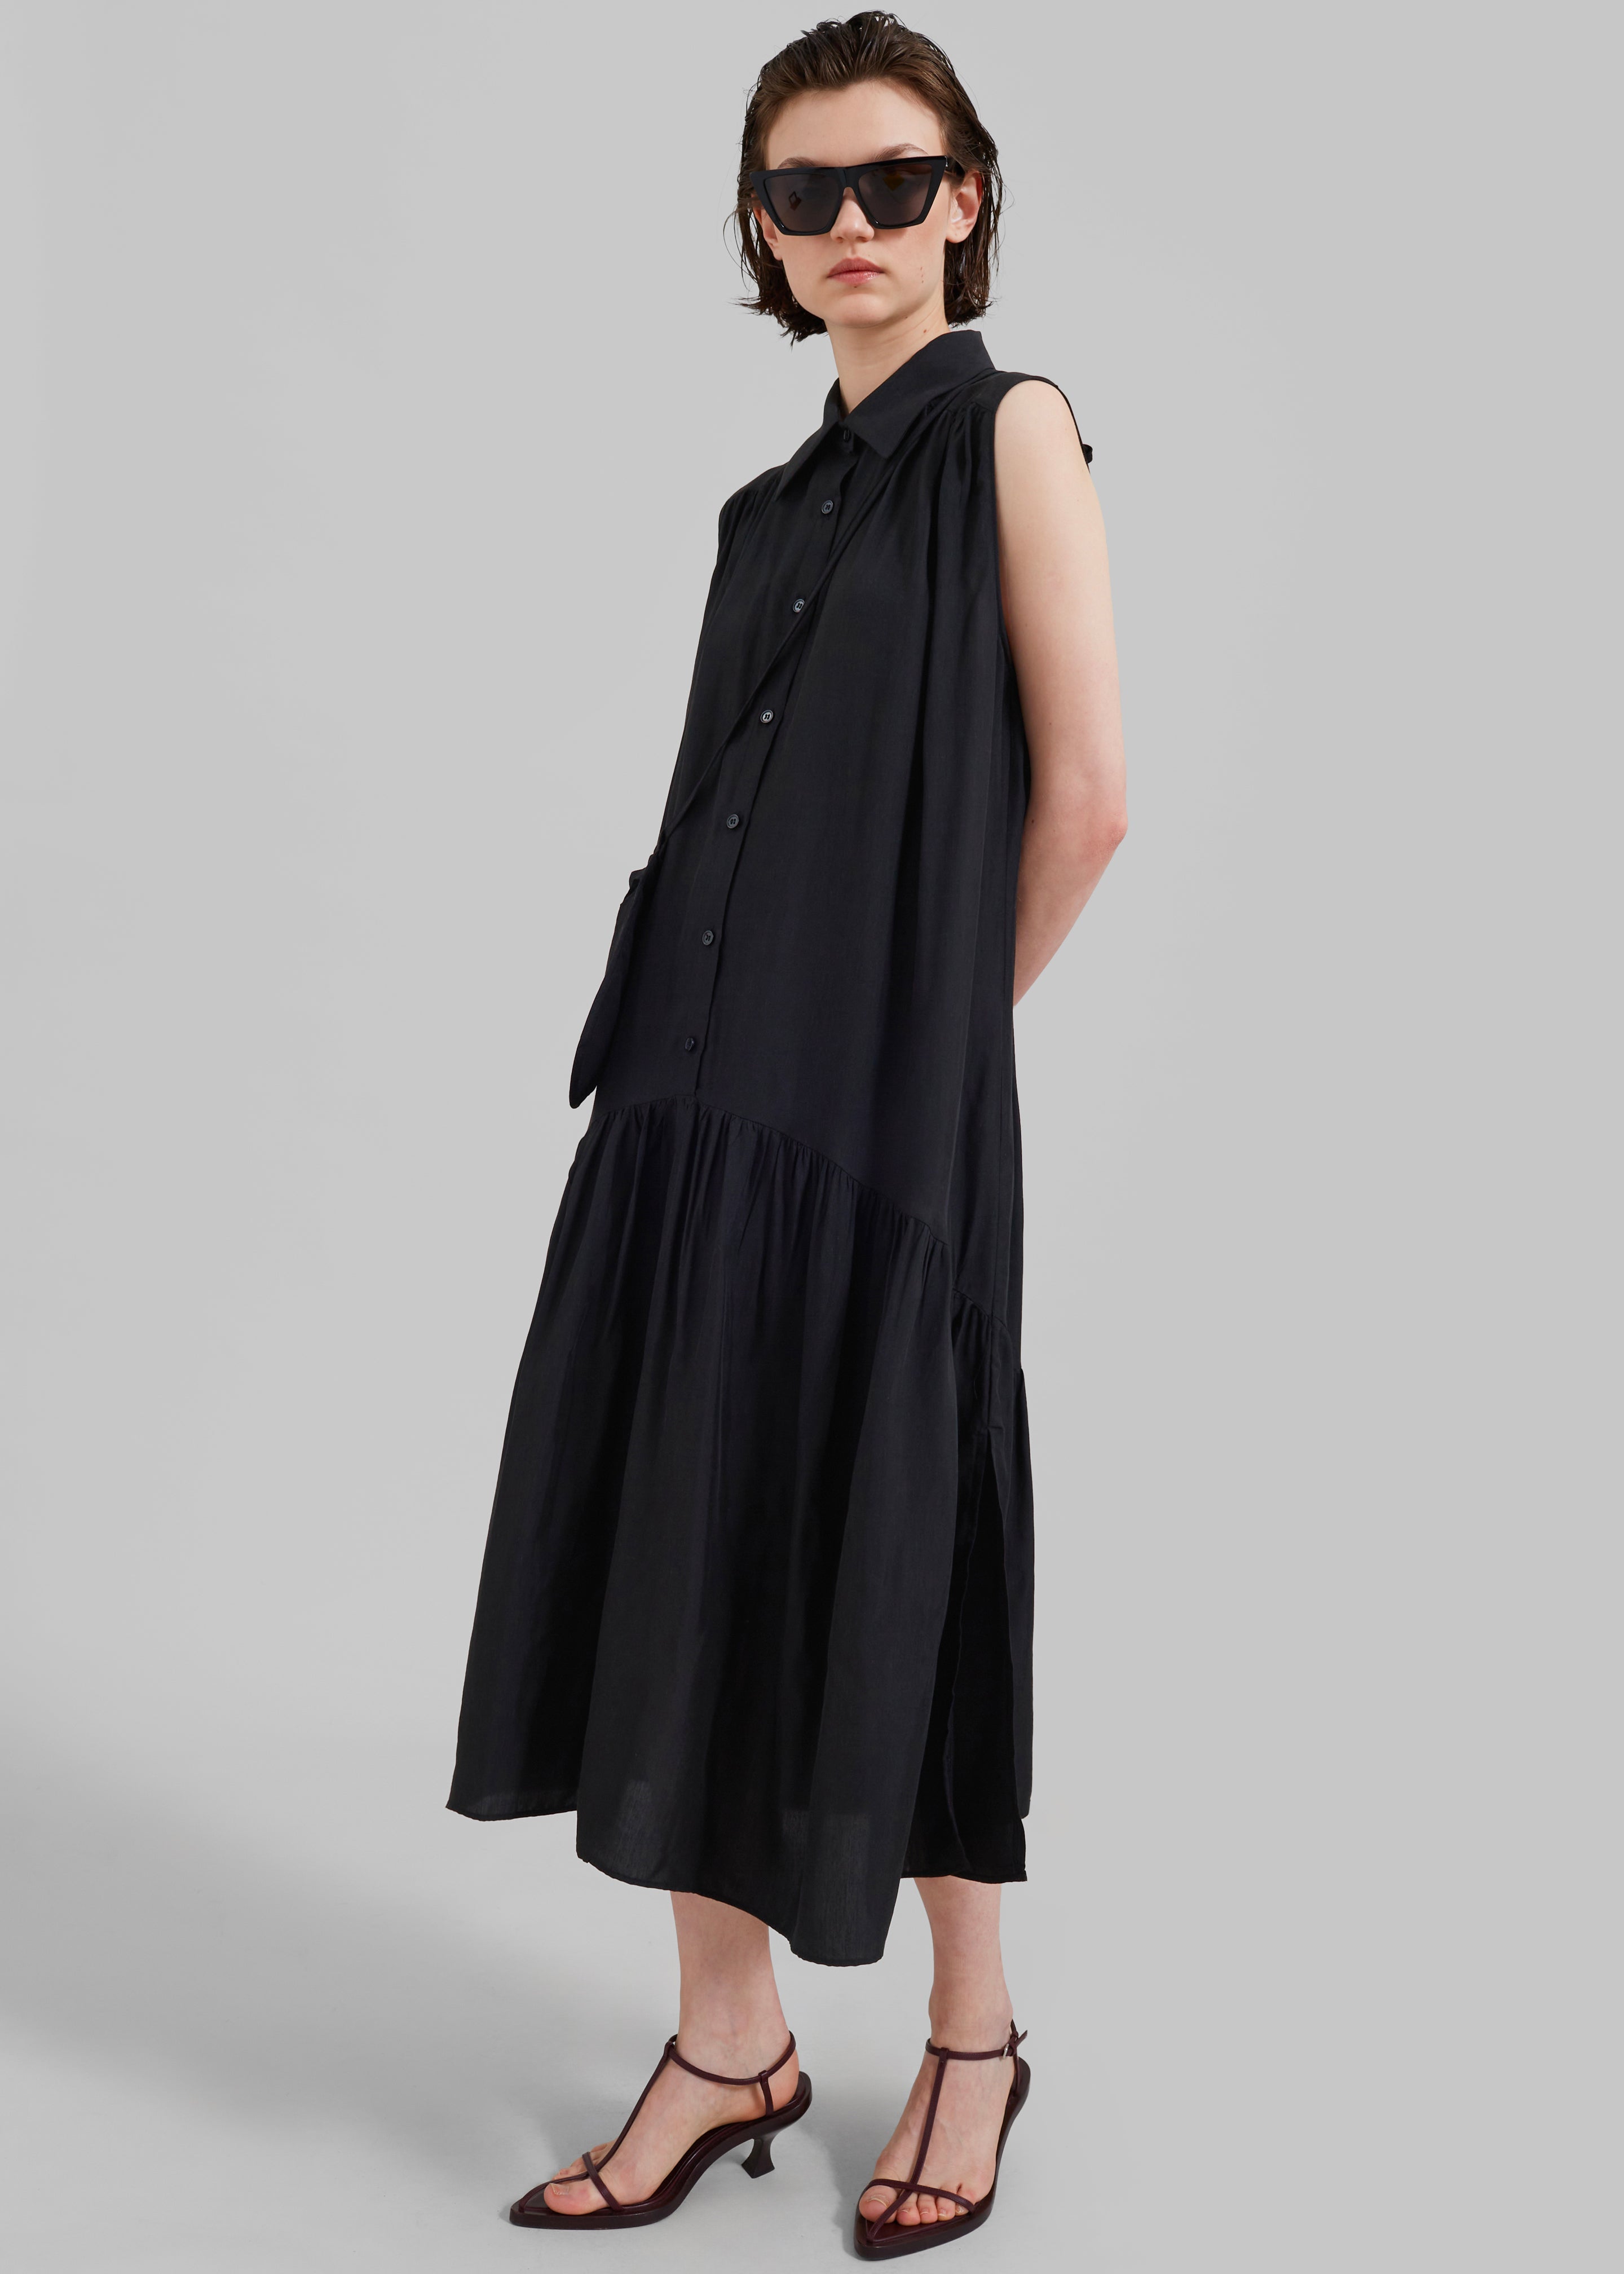 Maela Button Up Midi Dress - Black - 6